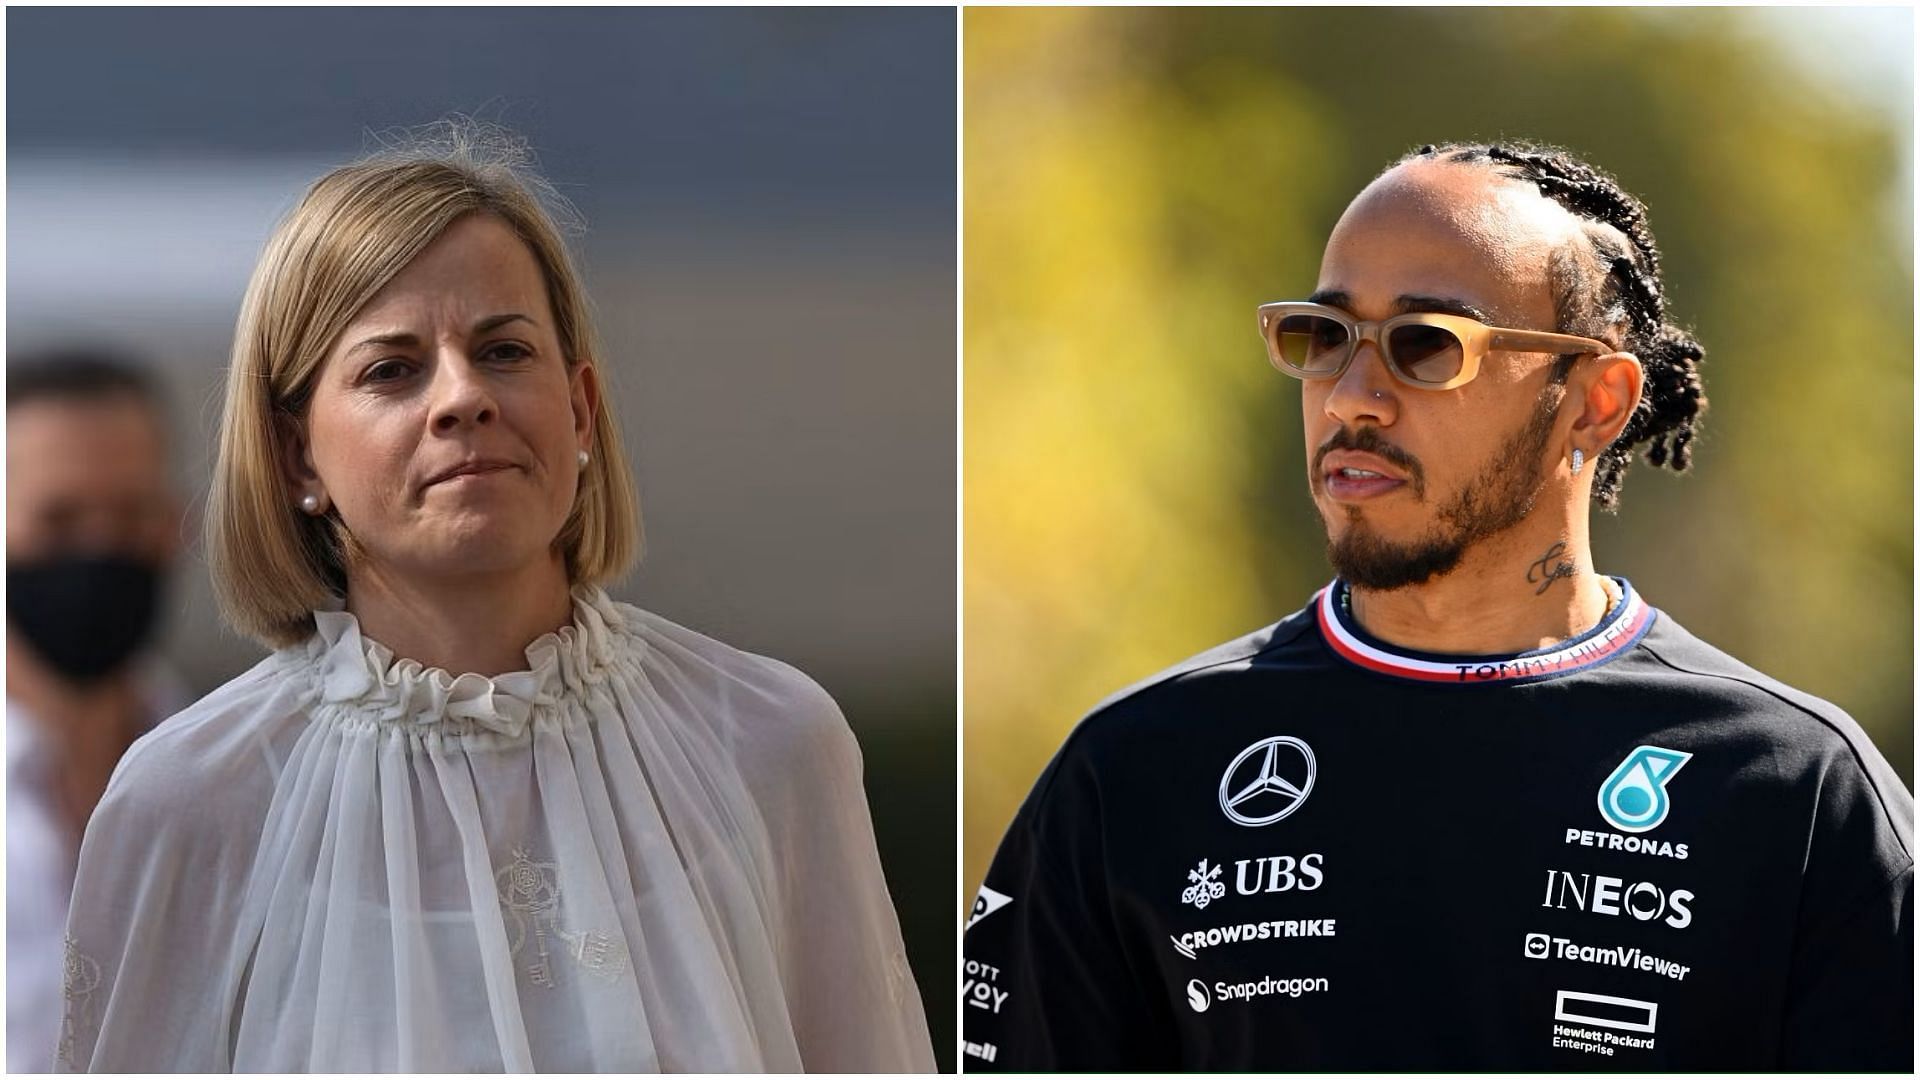 Susie Wolff (L) and Lewis Hamilton (R) (Collage via Sportskeeda)